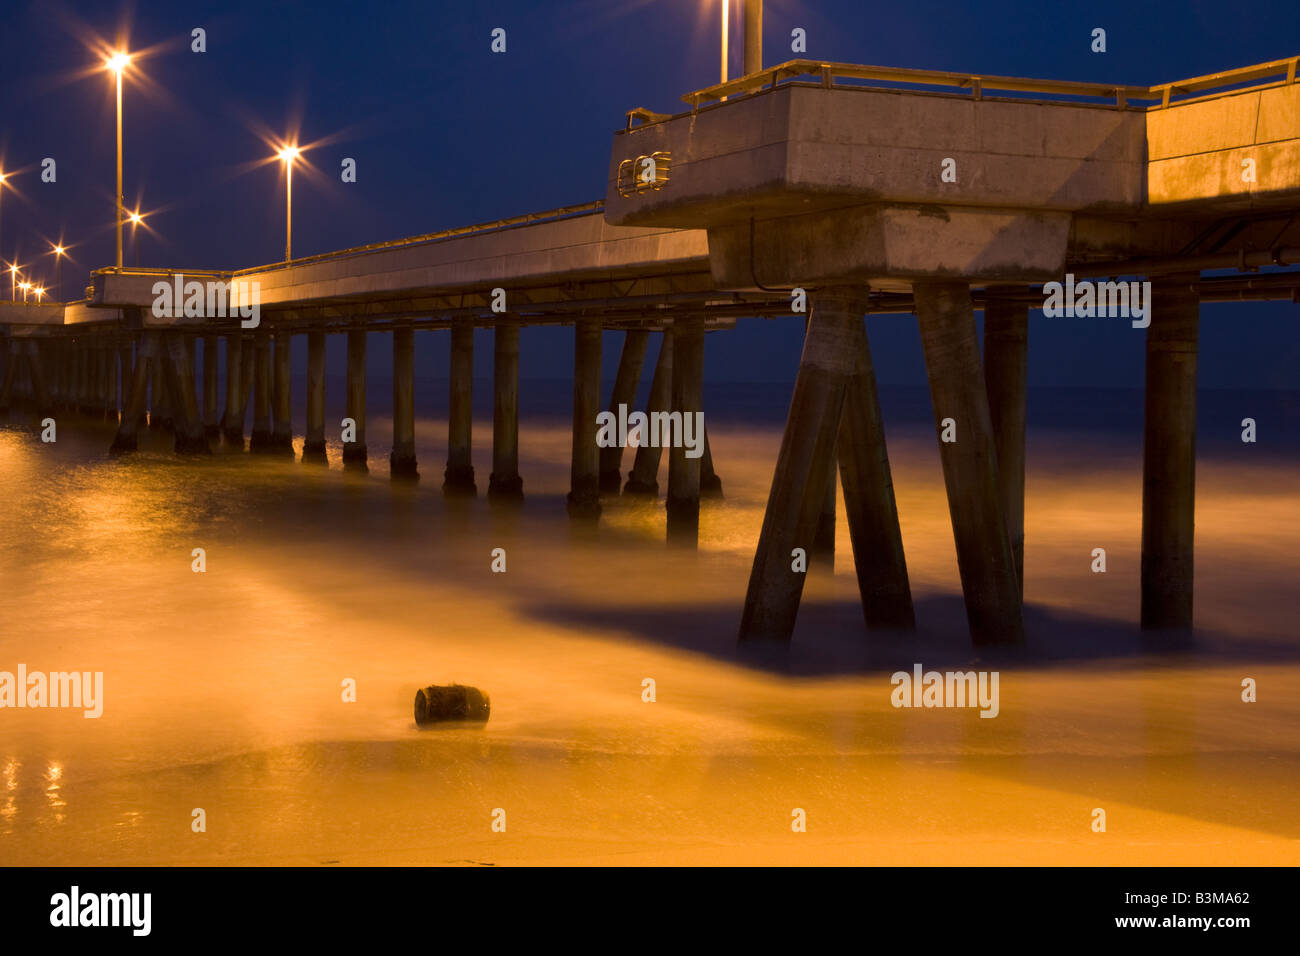 Venedig Pier Venice Beach Los Angeles County California Vereinigten Staaten von Amerika Stockfoto